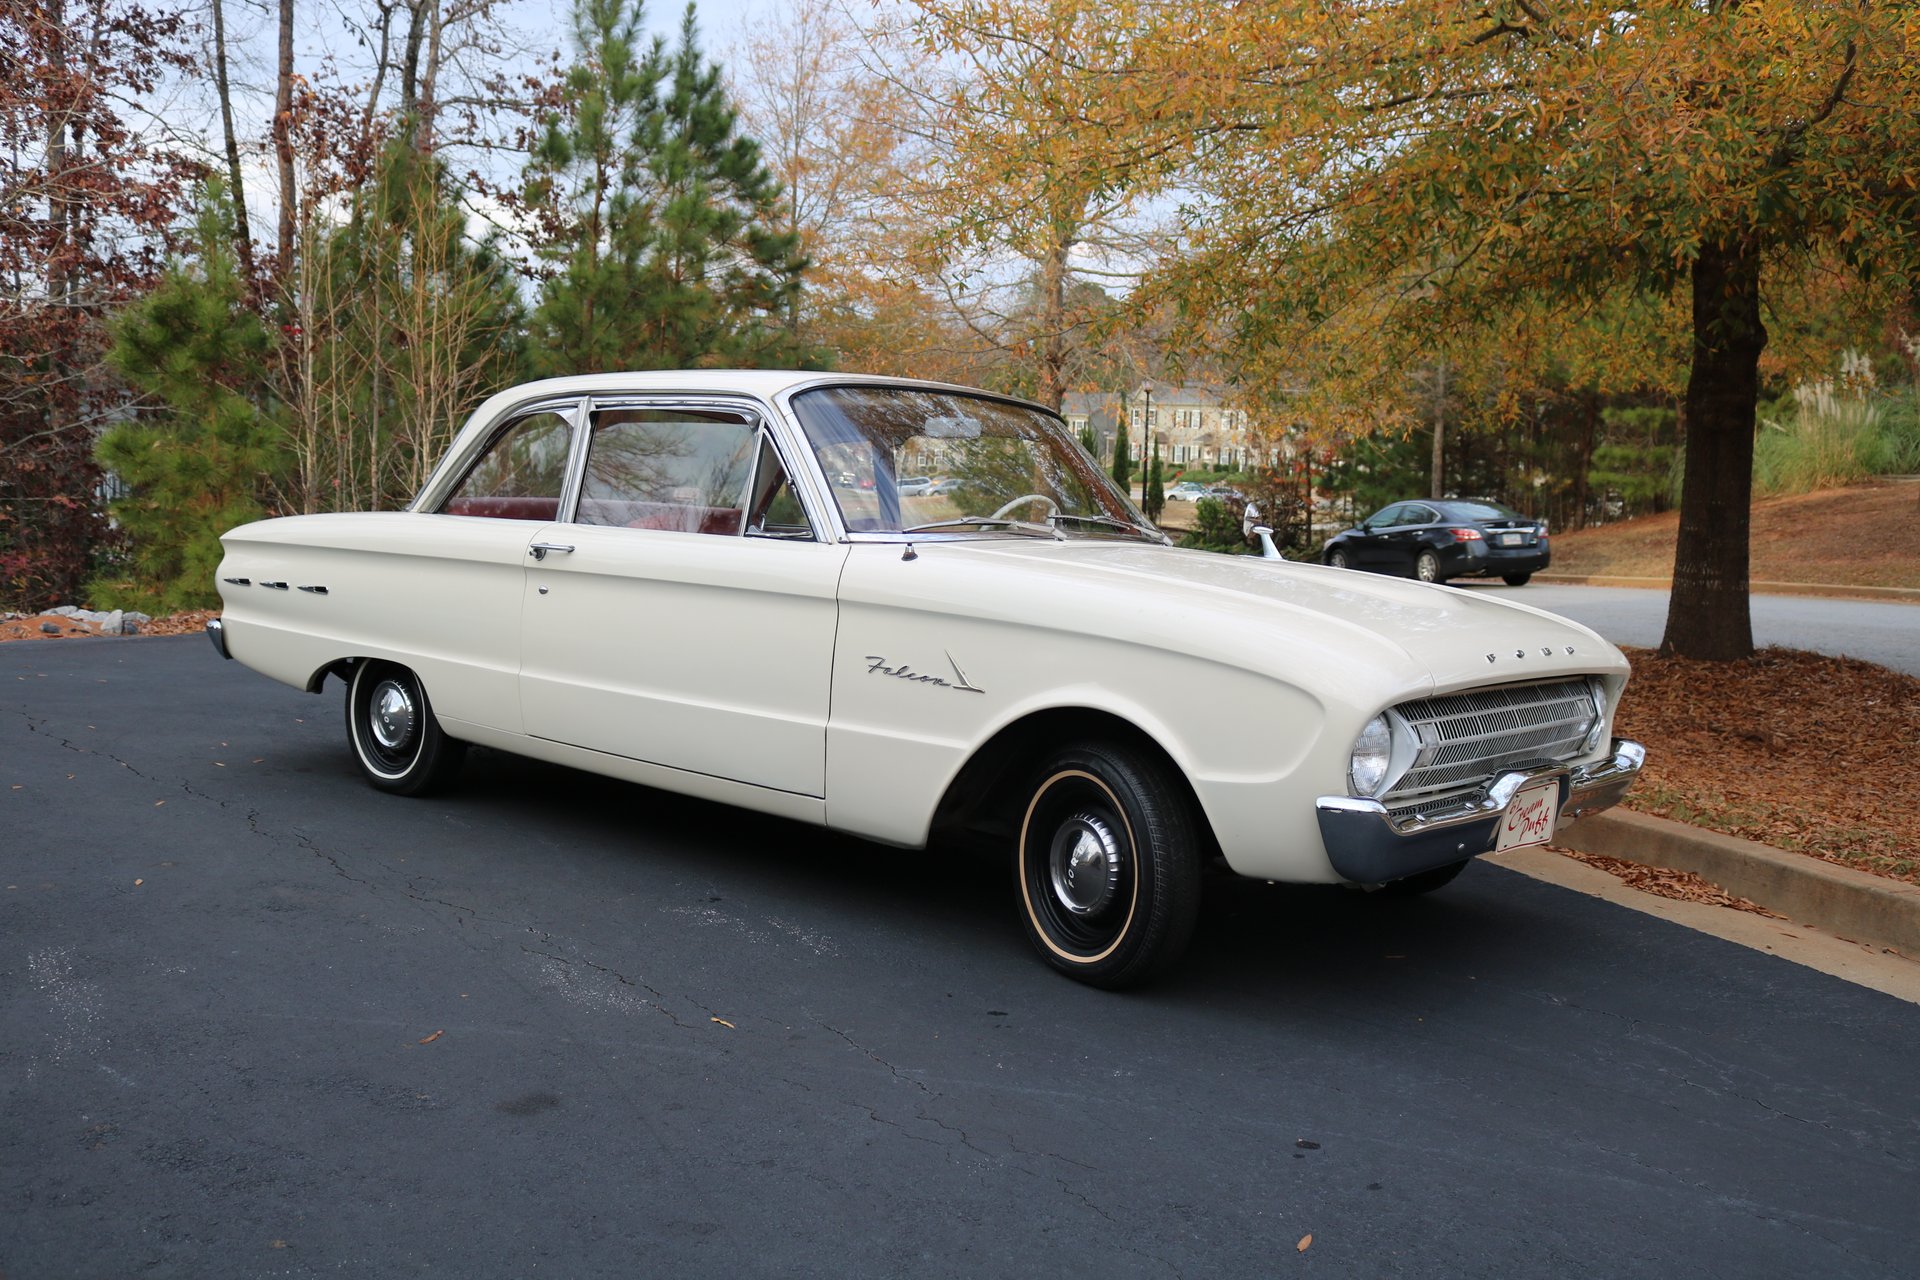 No Reserve: 347-Powered 1961 Ford Falcon Futura for sale 